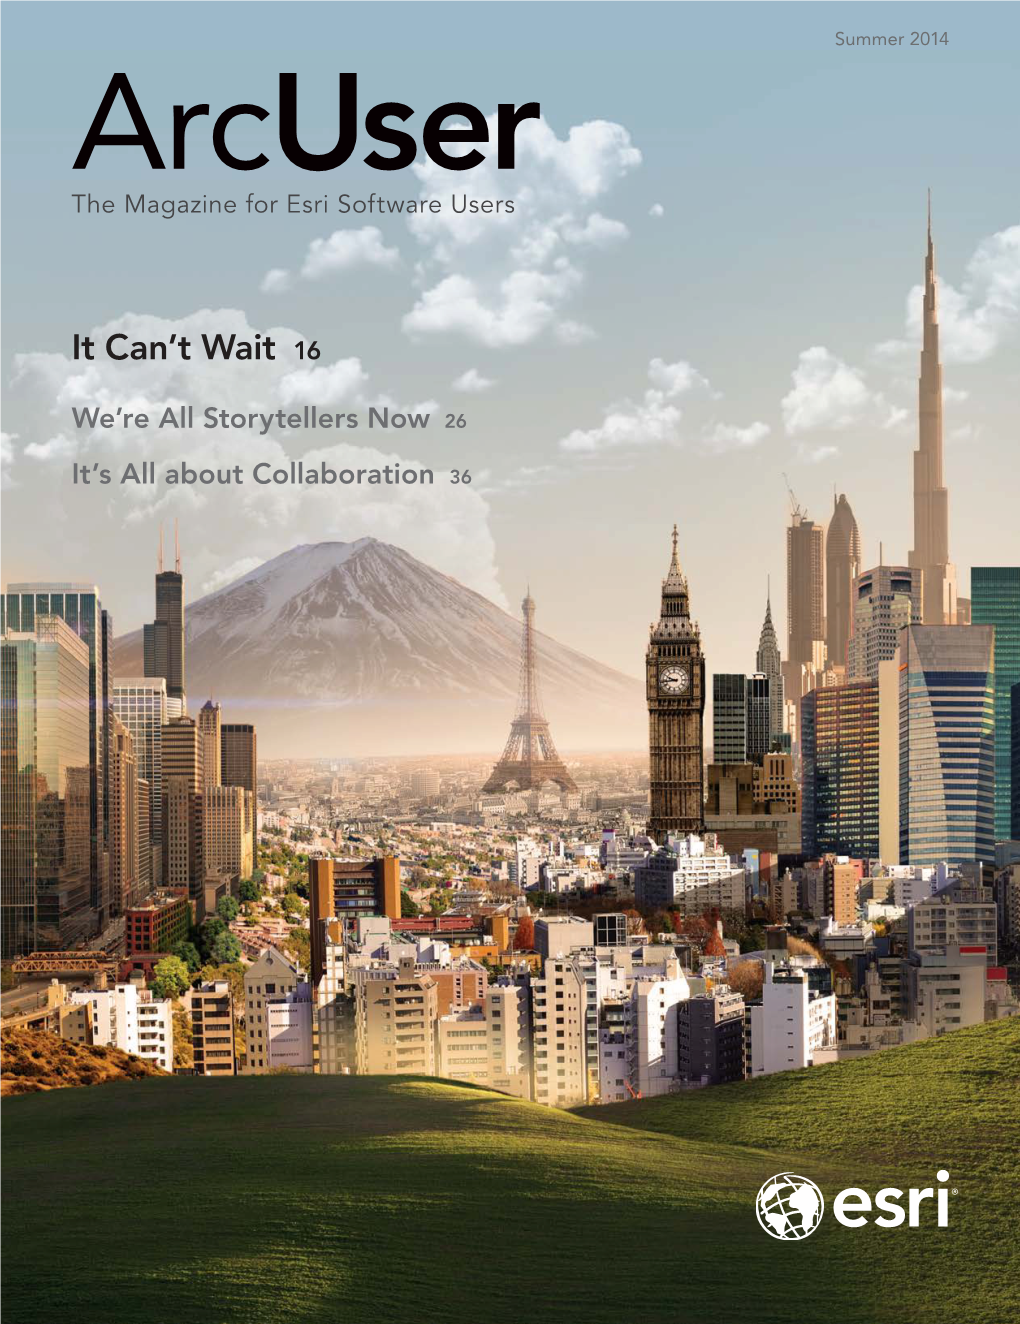 Arcuser Magazine Summer 2014 Issue